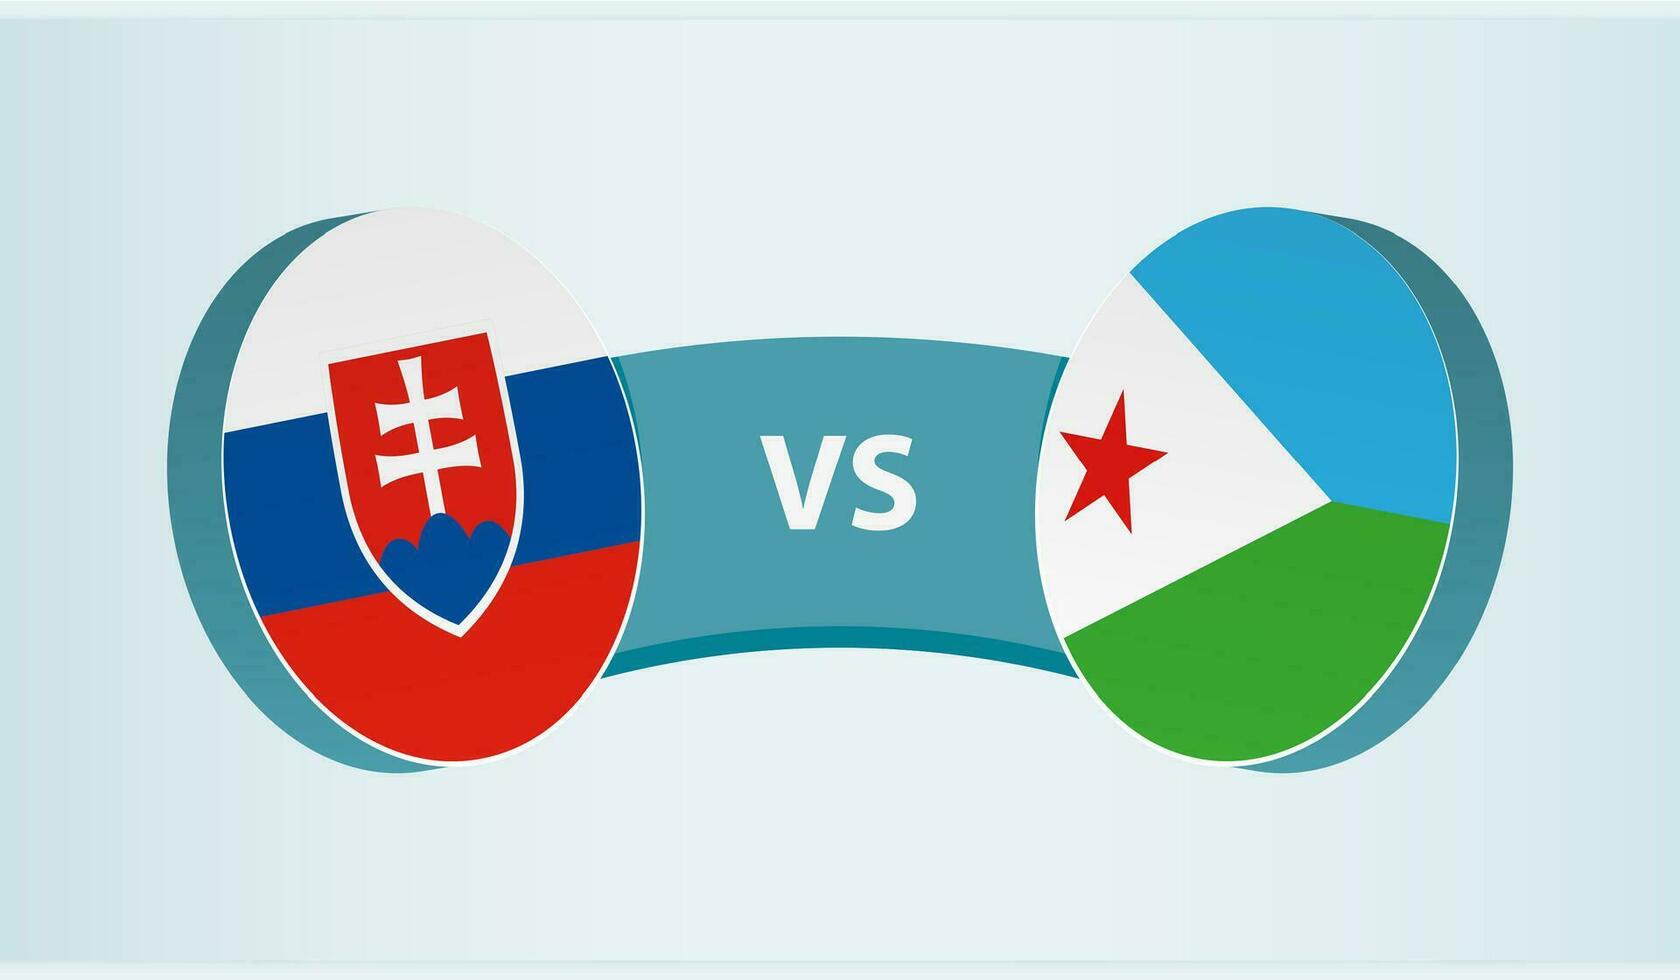 Slovakia versus Djibouti, team sports competition concept. vector